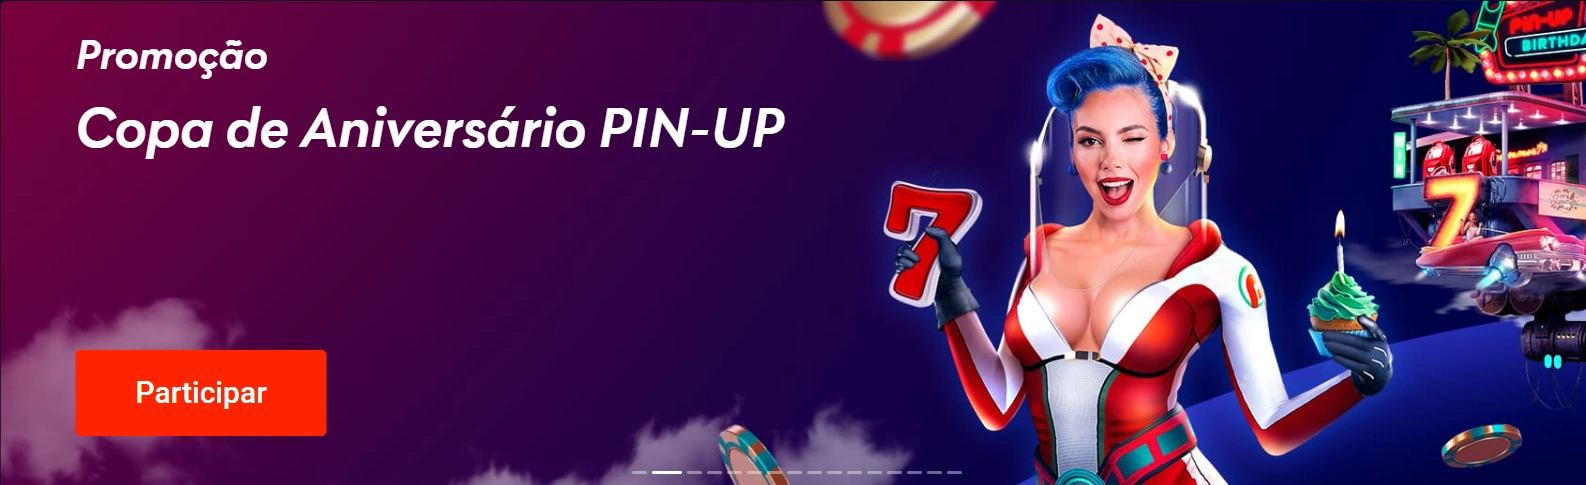 Pin Up Casino Promocao